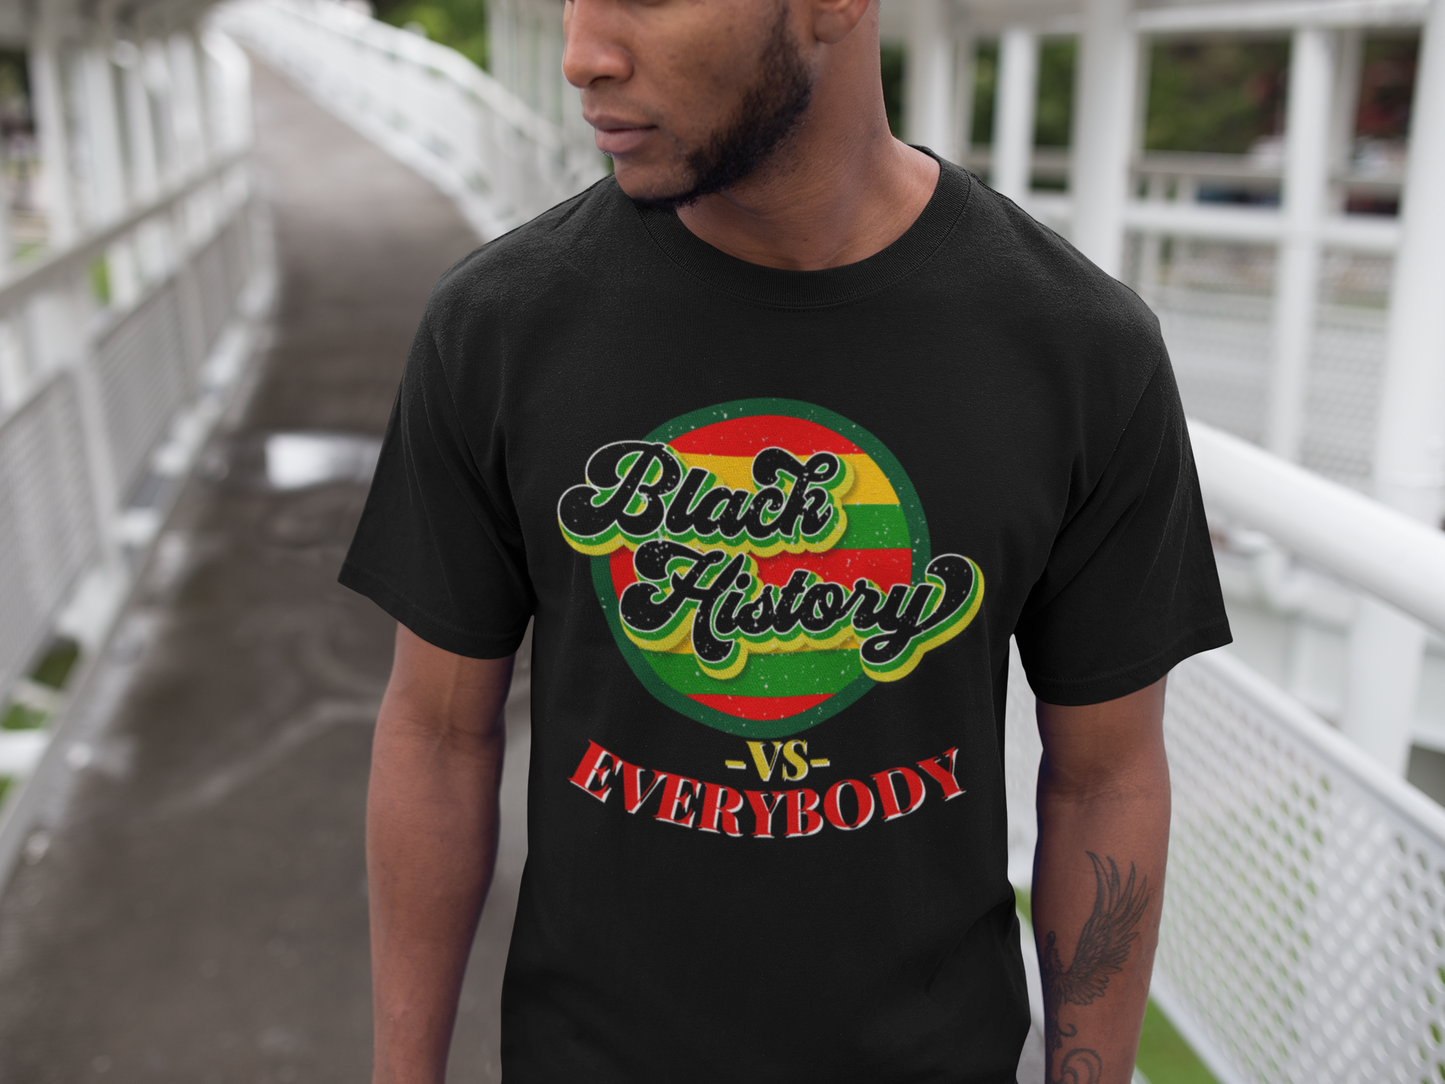 Black History Vs Everybody T-shirt